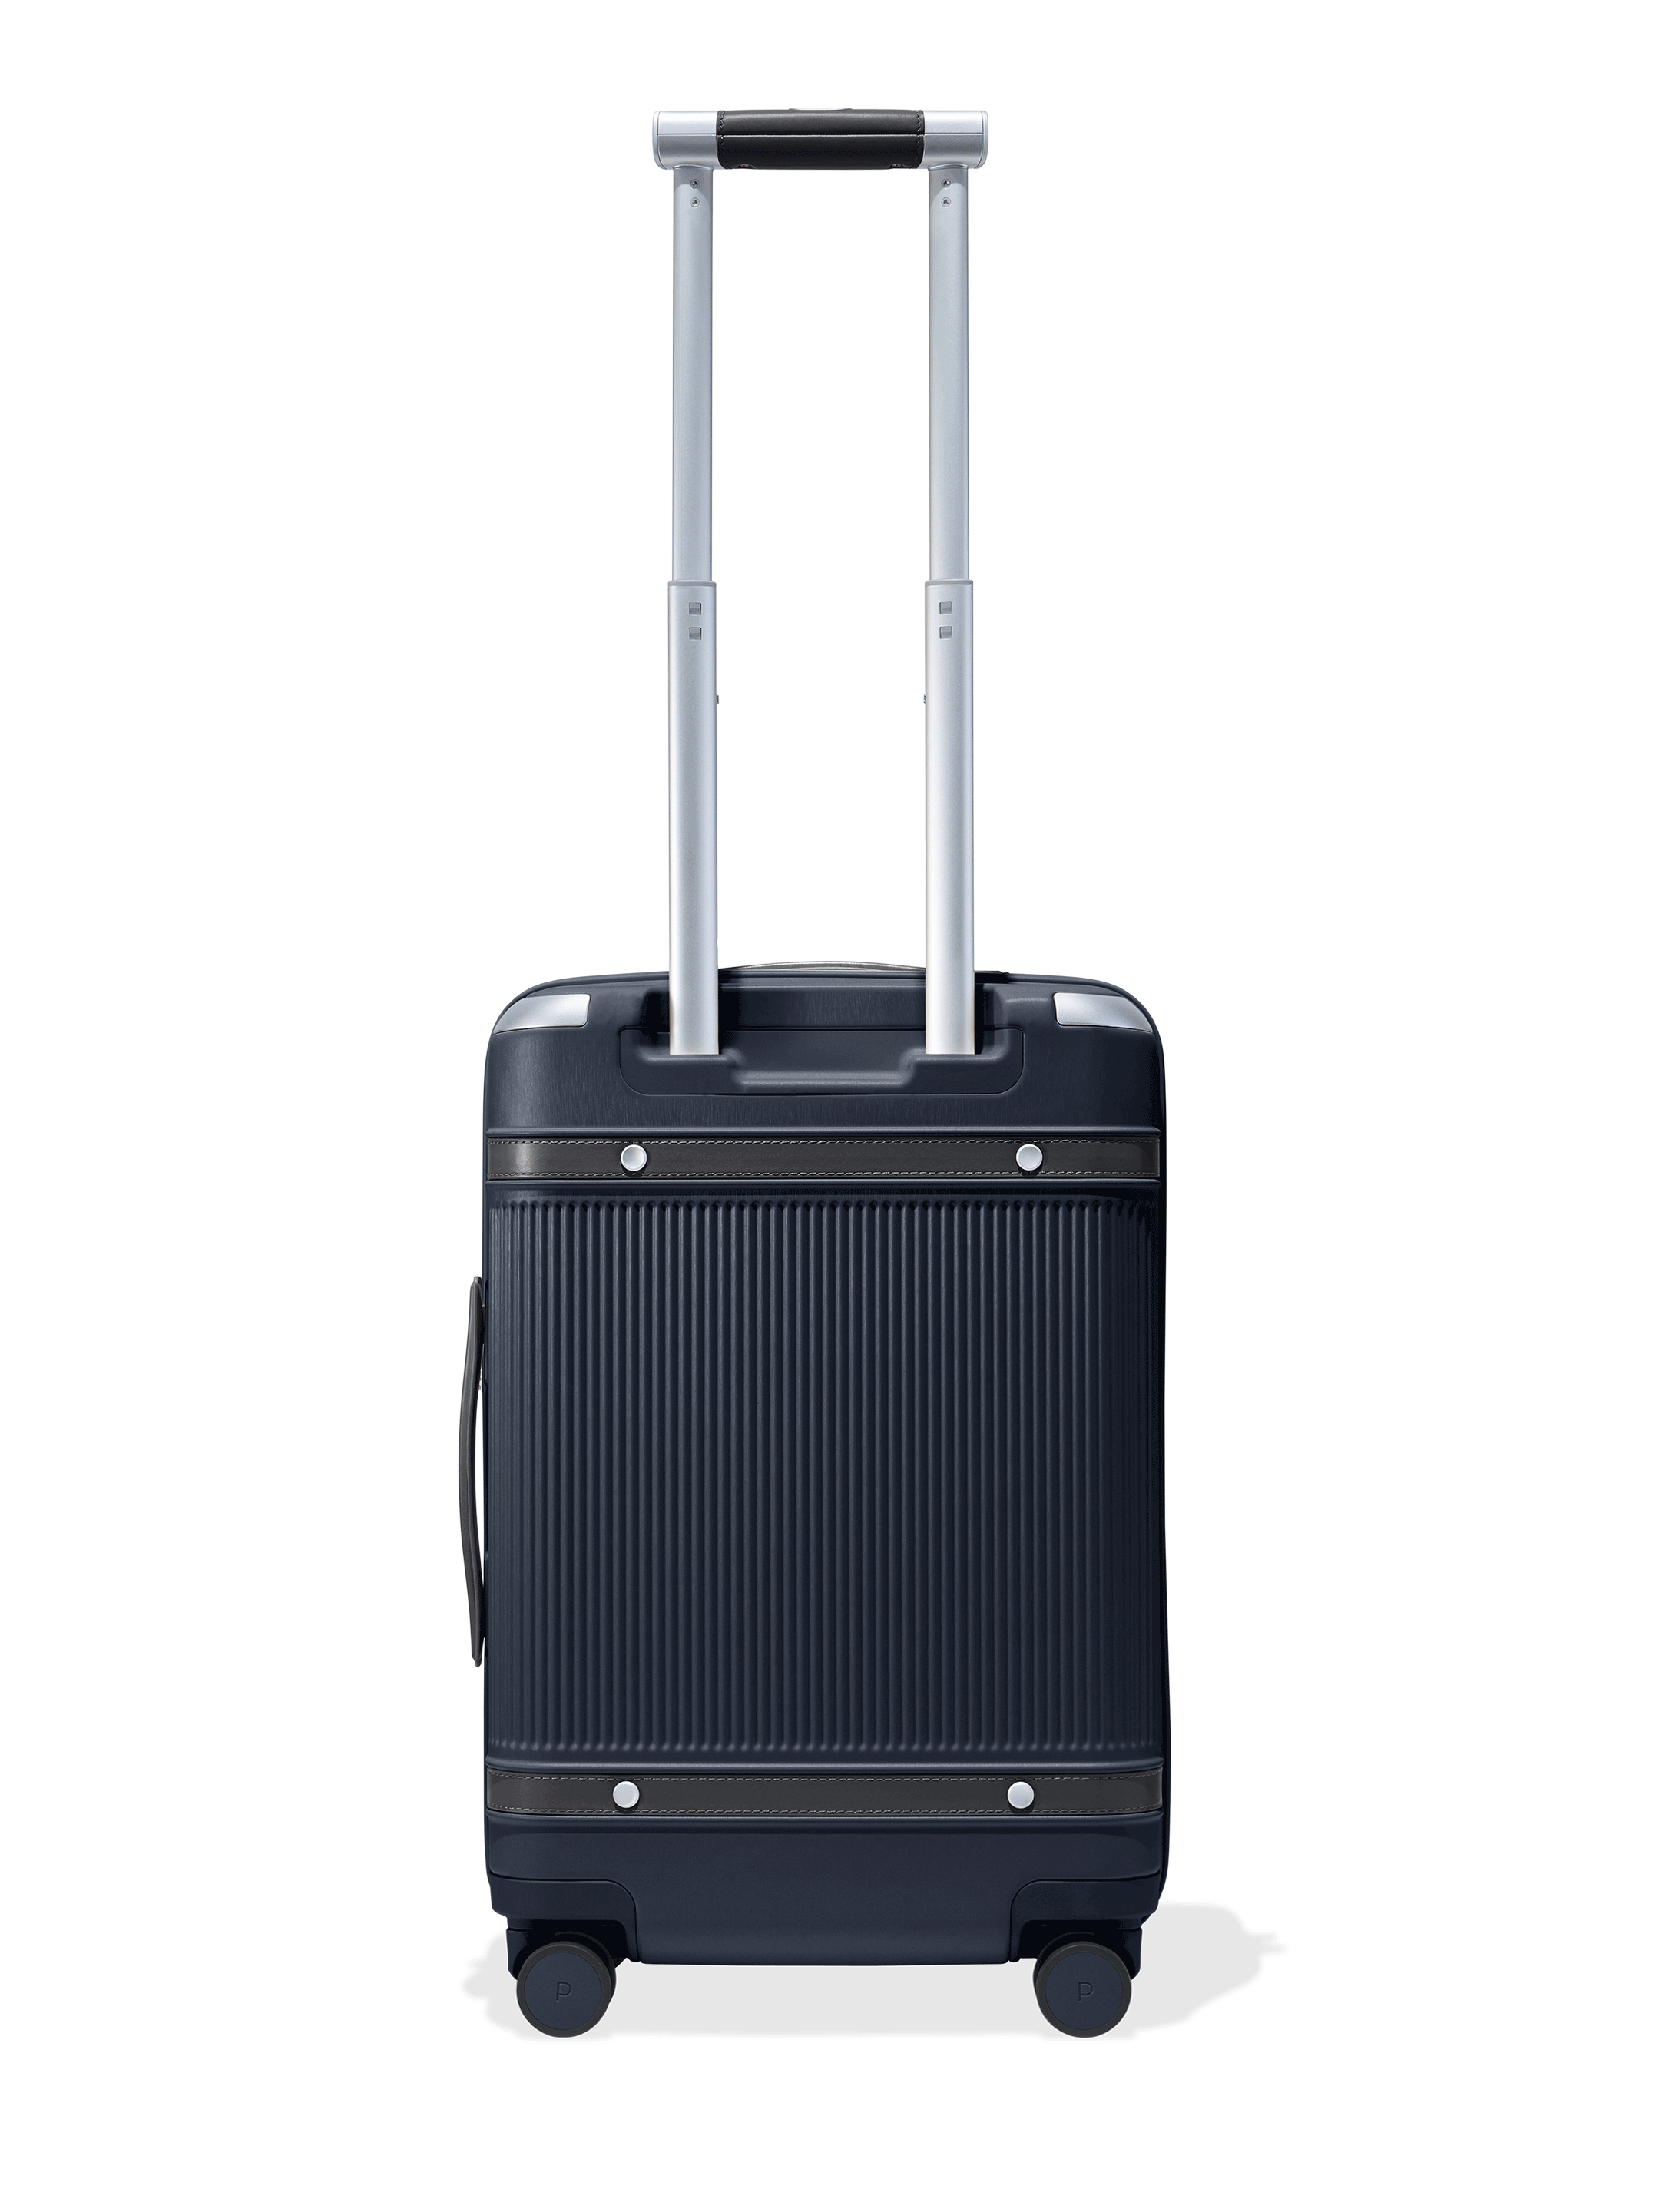 Wenger Rove 27 inch Hardside Spinner Luggage - Black